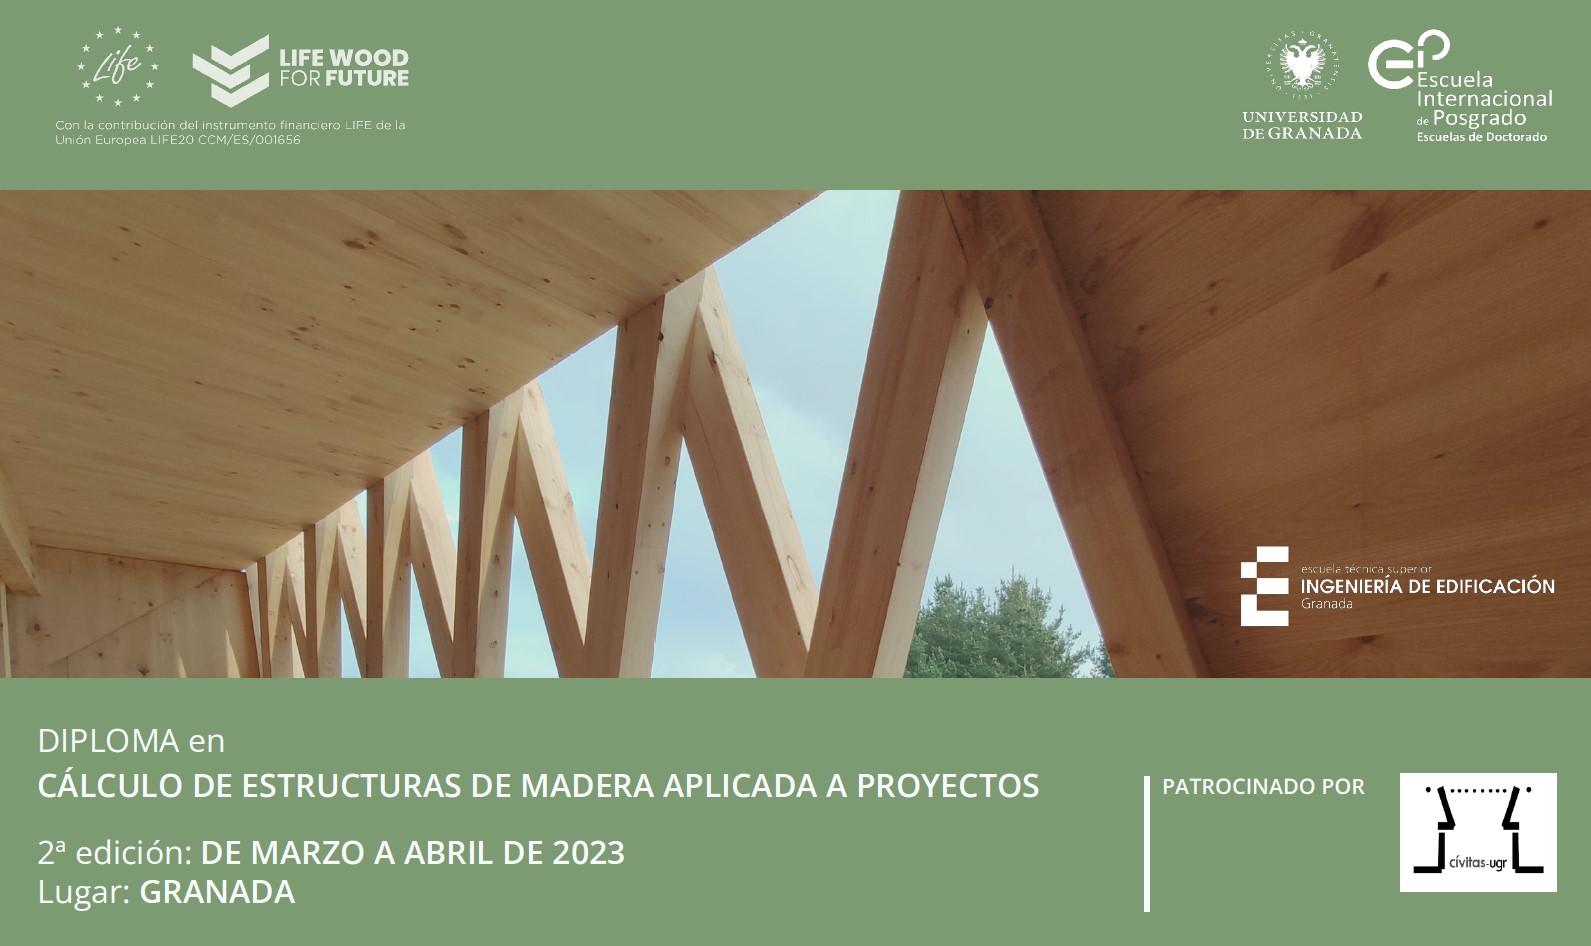 LIFE Wood for Future lanza la segunda edicición del curso: DIPLOMA en Cálculo de Estructuras de Madera Aplicada a Proyectos